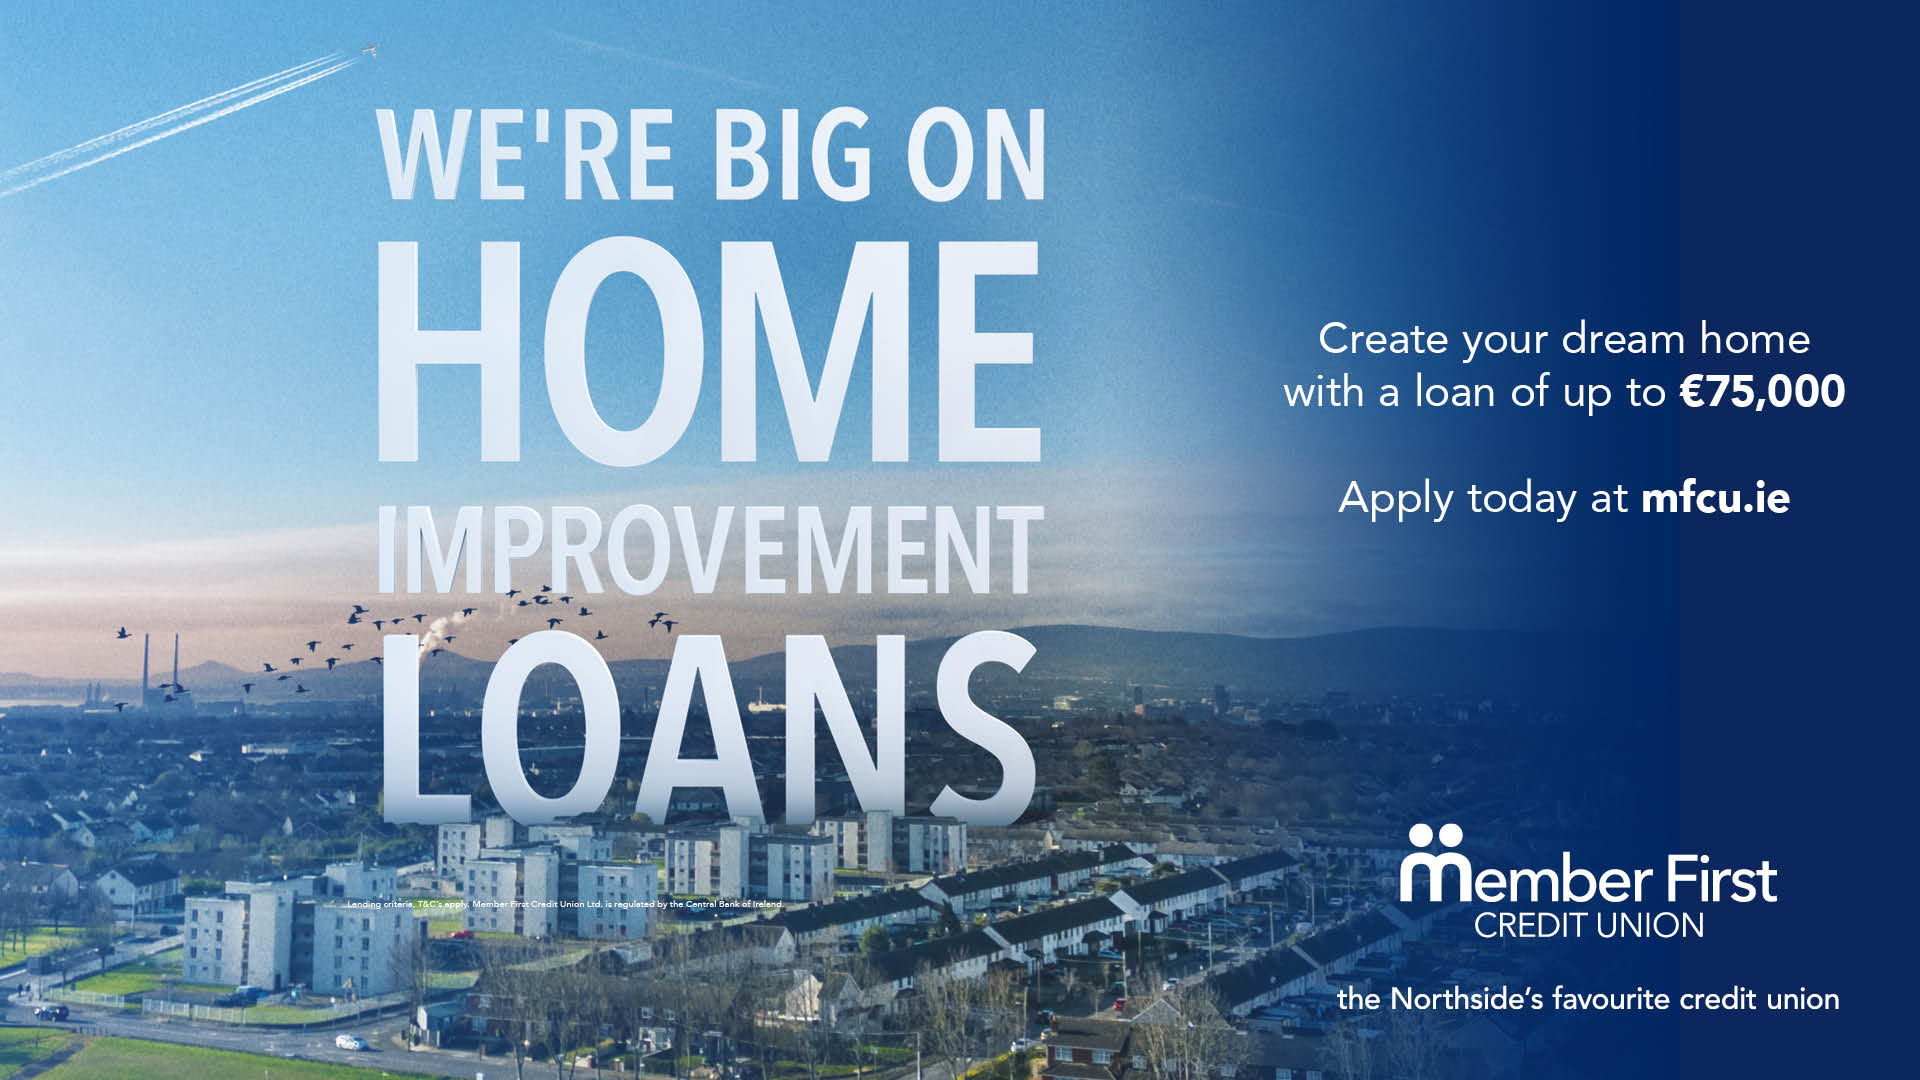 We're BIG on Loans - MFCU